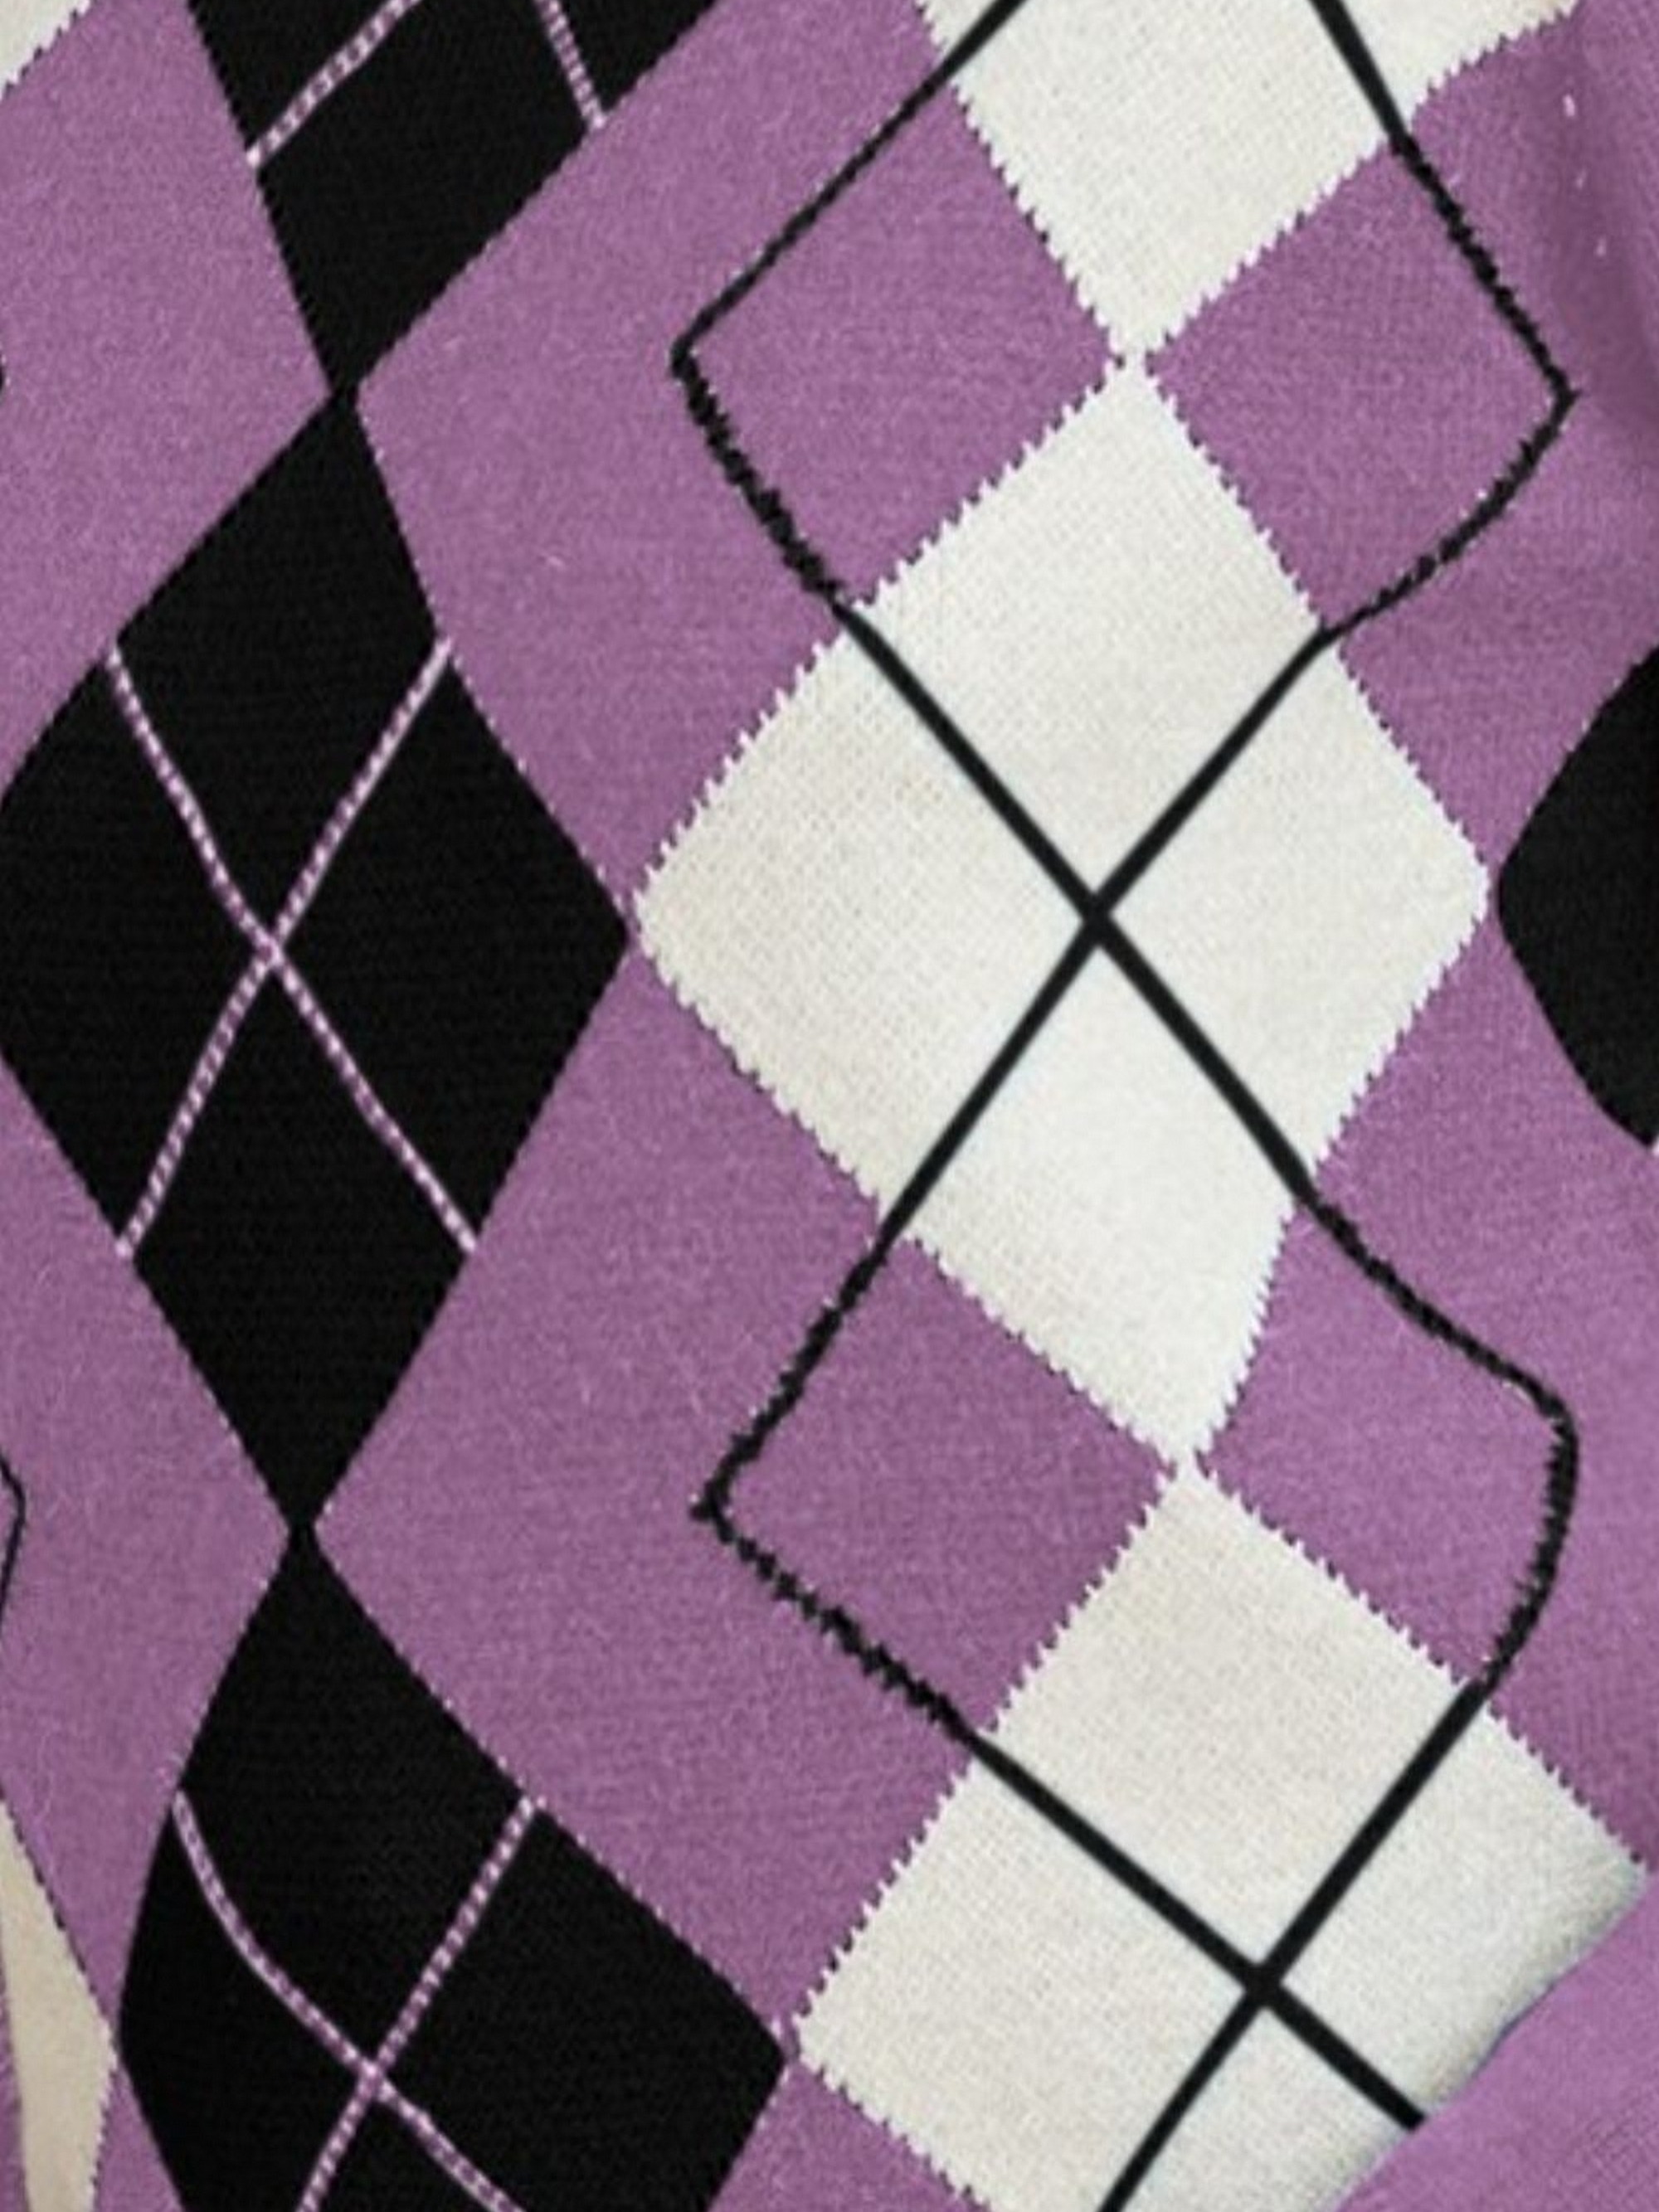 DuAnyozu Women Color Block Sweater Casual Argyle Print Long Sleeve V-neck  Knitwear